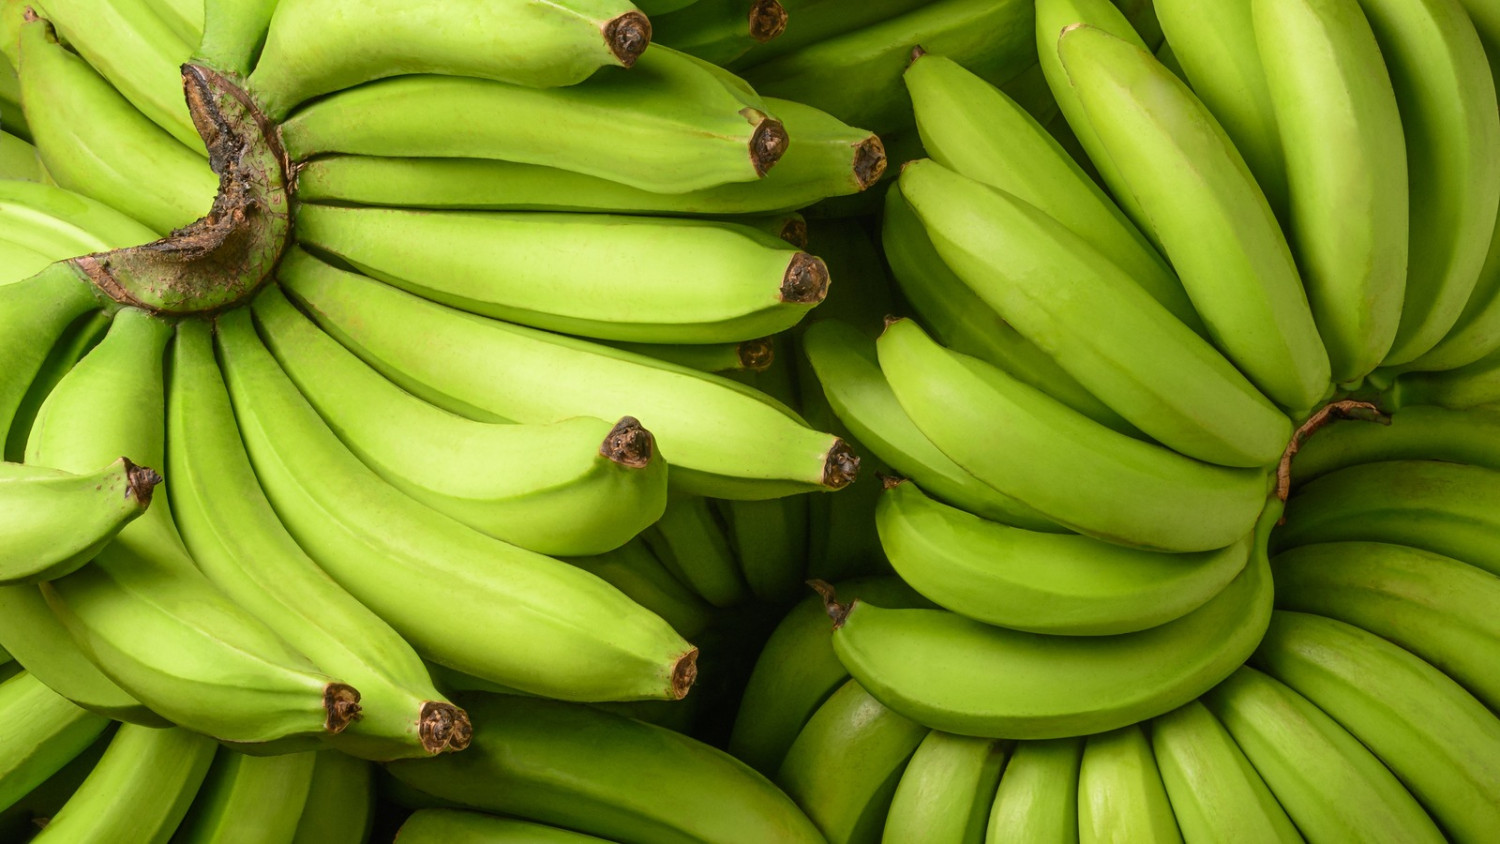 Green Bananas (Unripe)